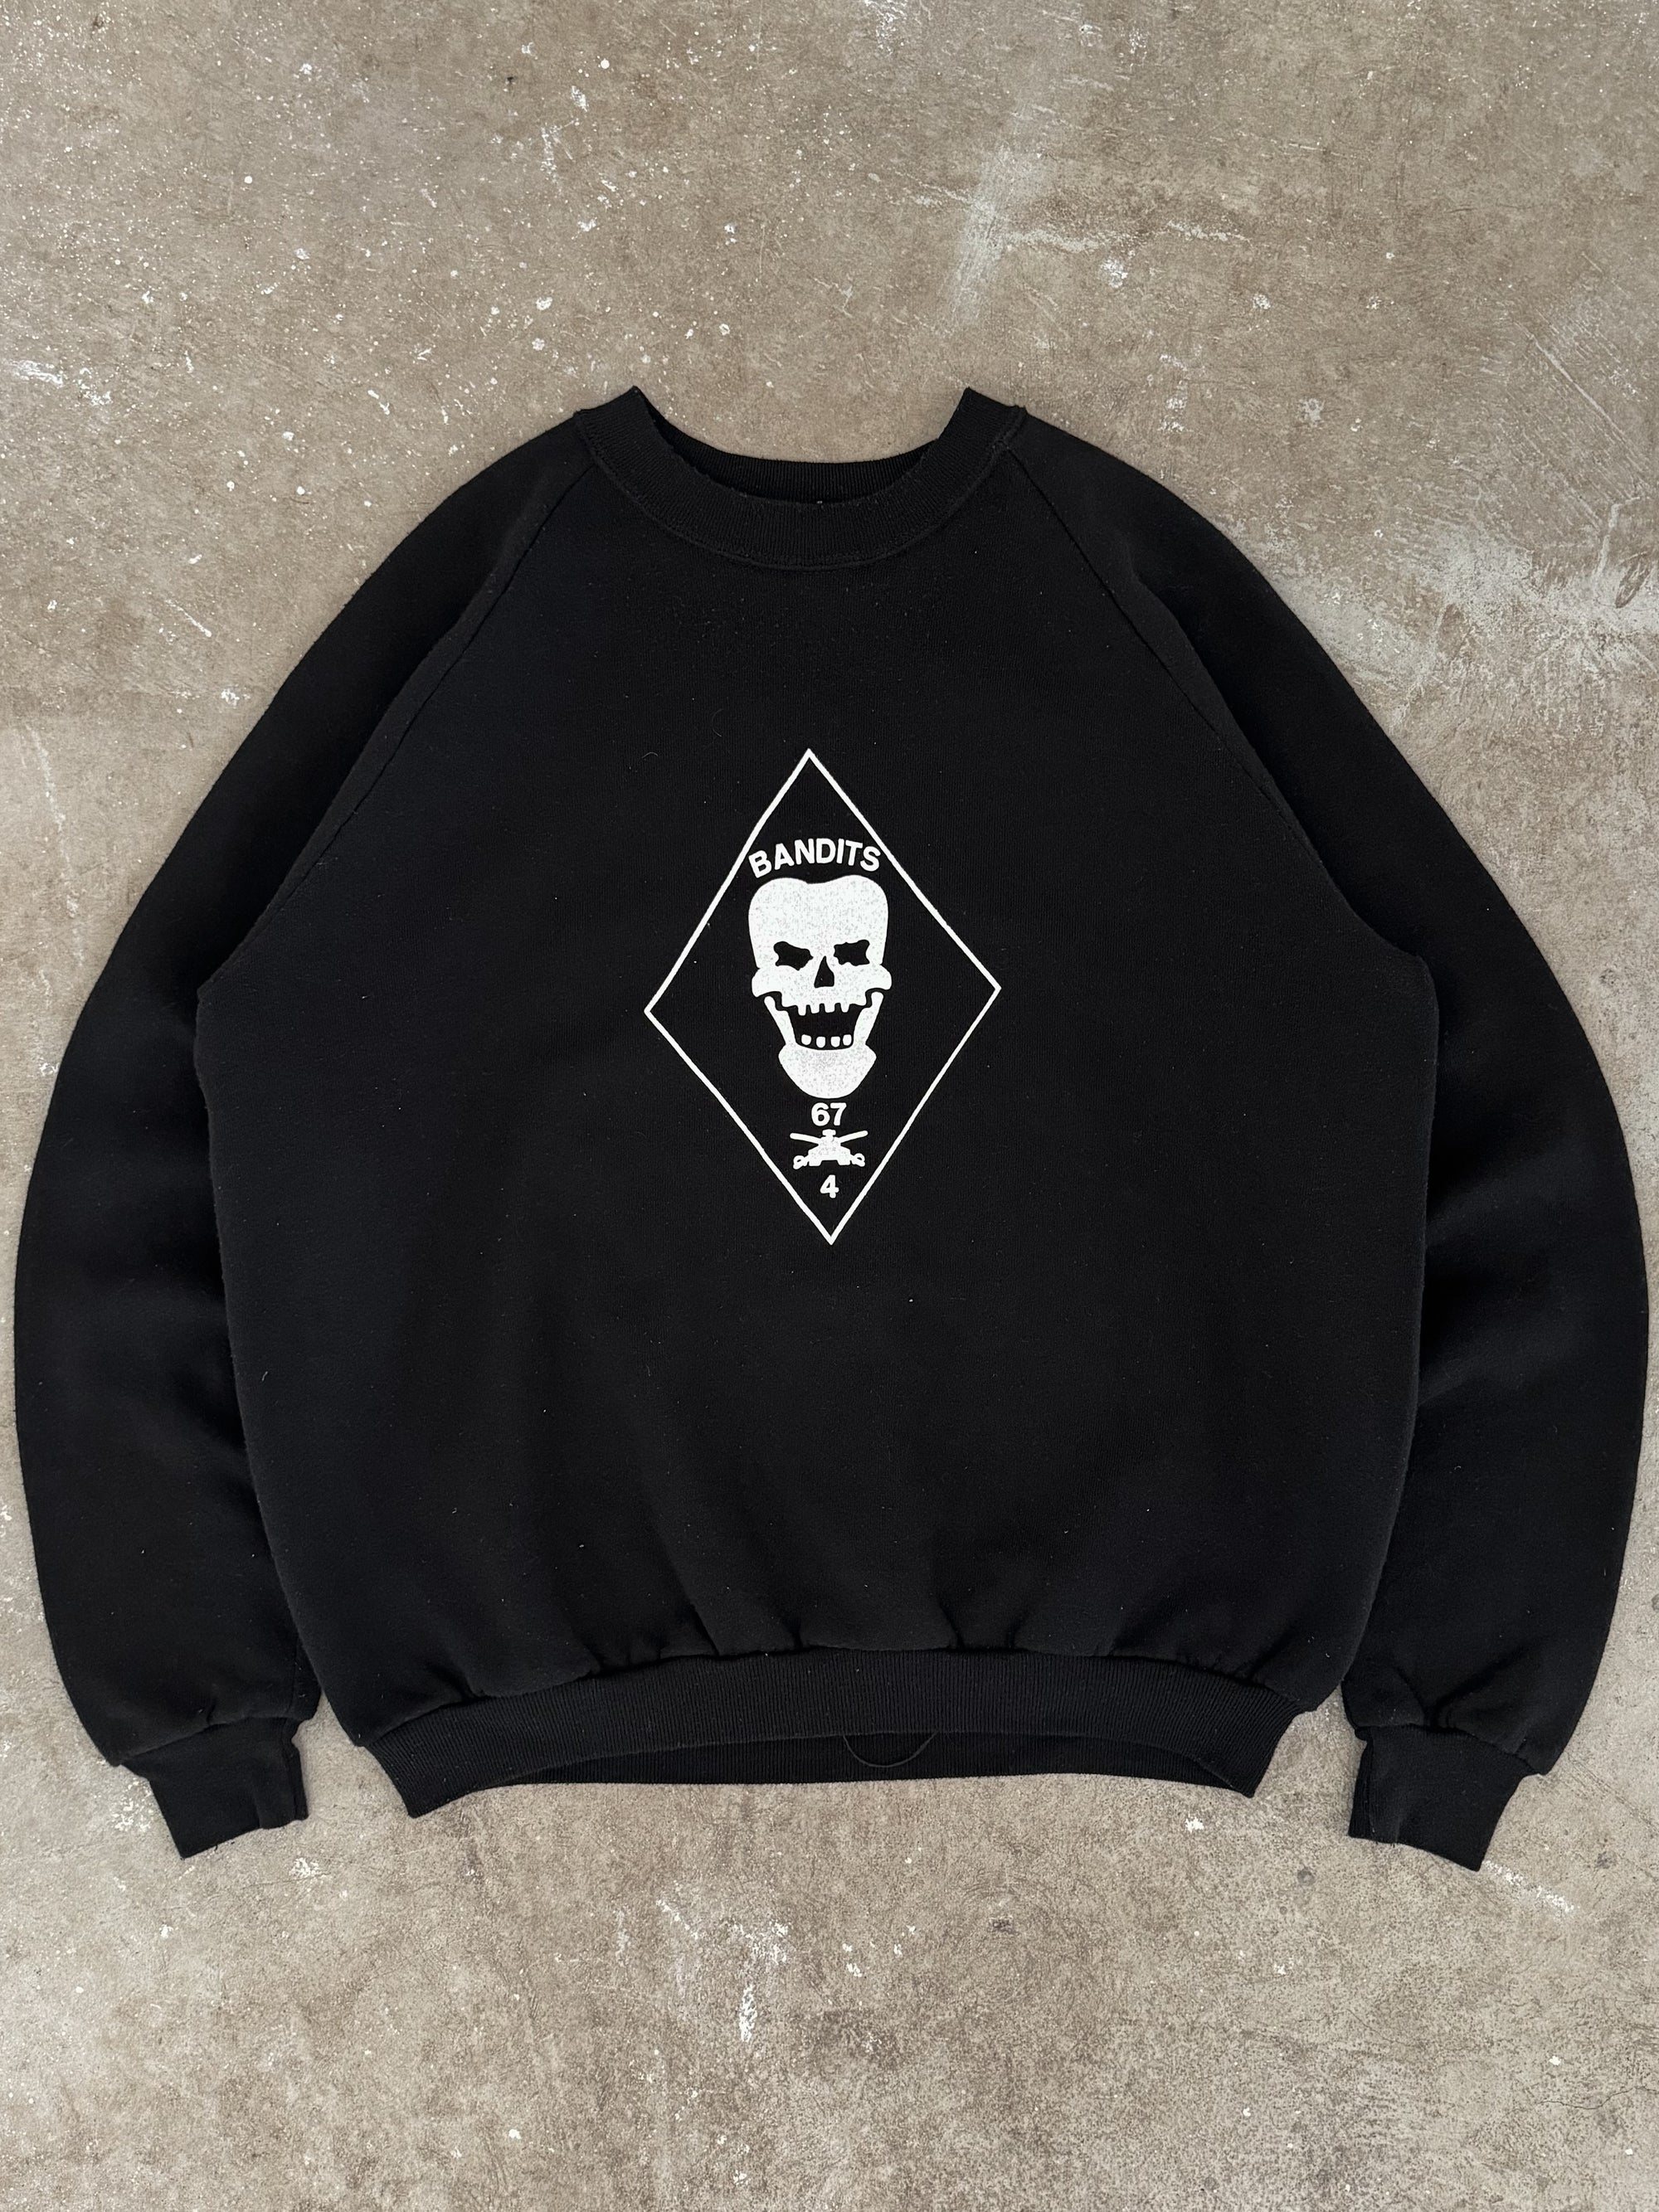 1980s "Bandits" Sweatshirt (L)